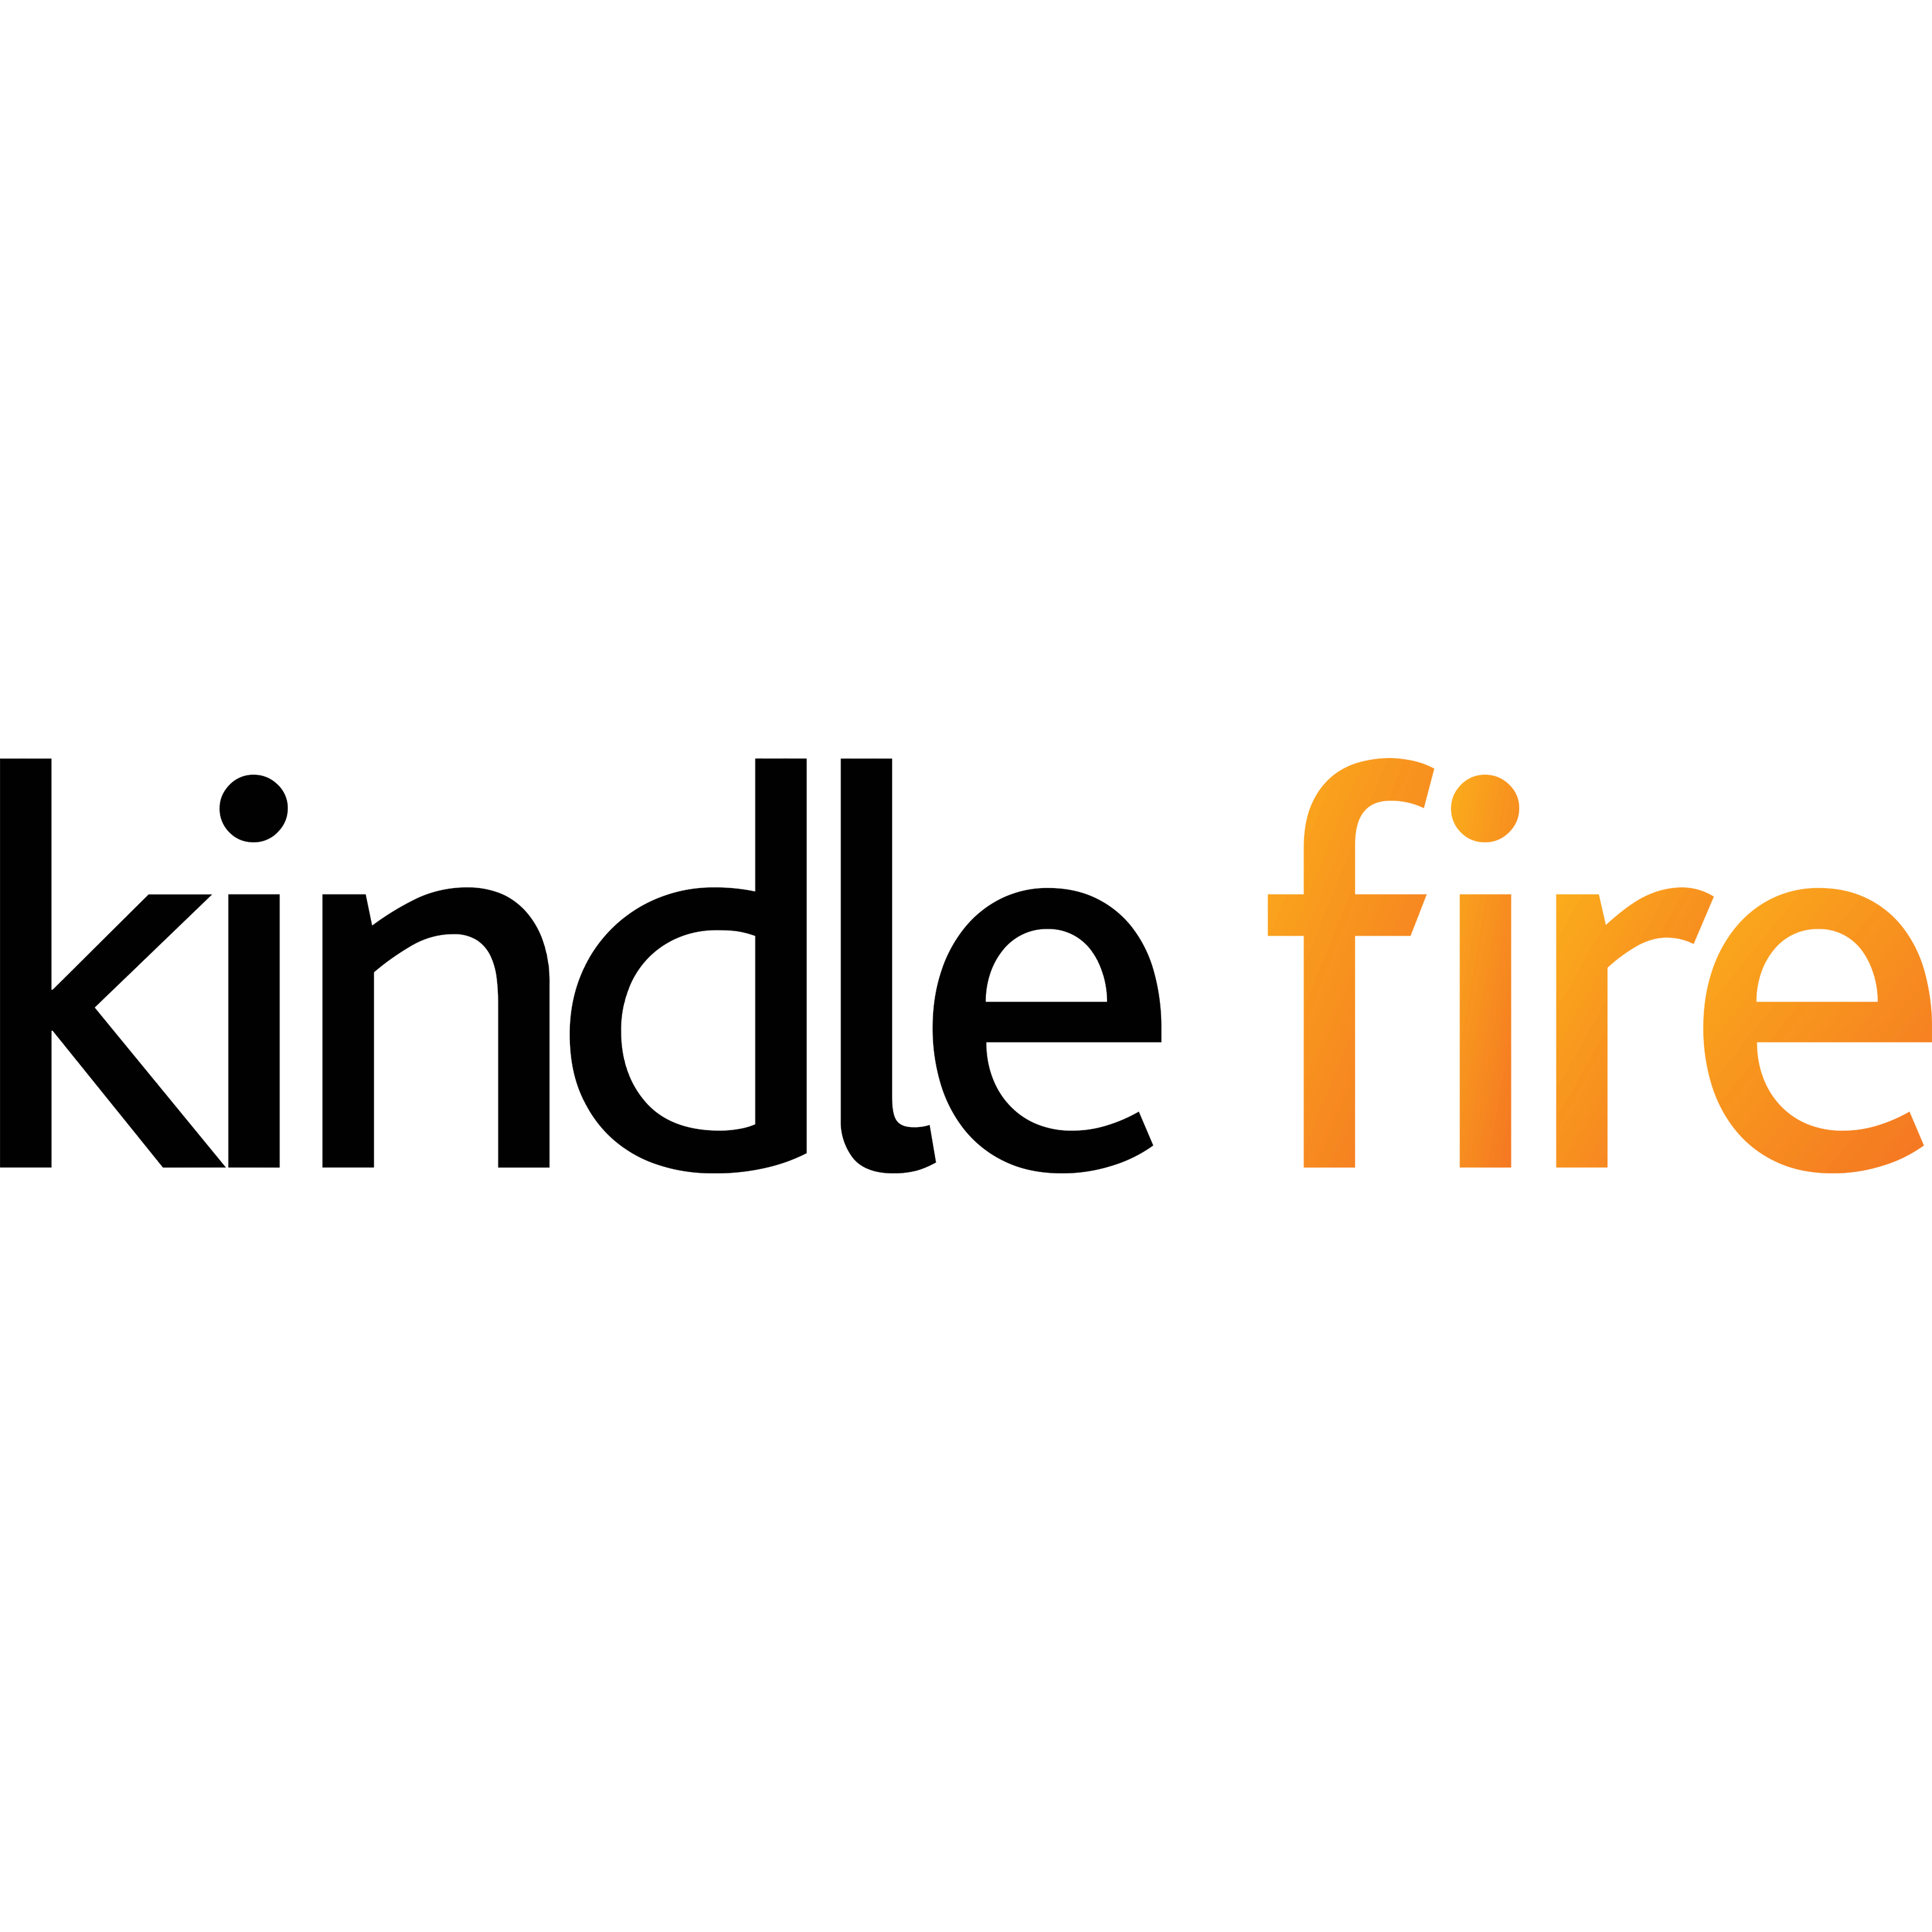 Kindle Fire Logo Transparent Image